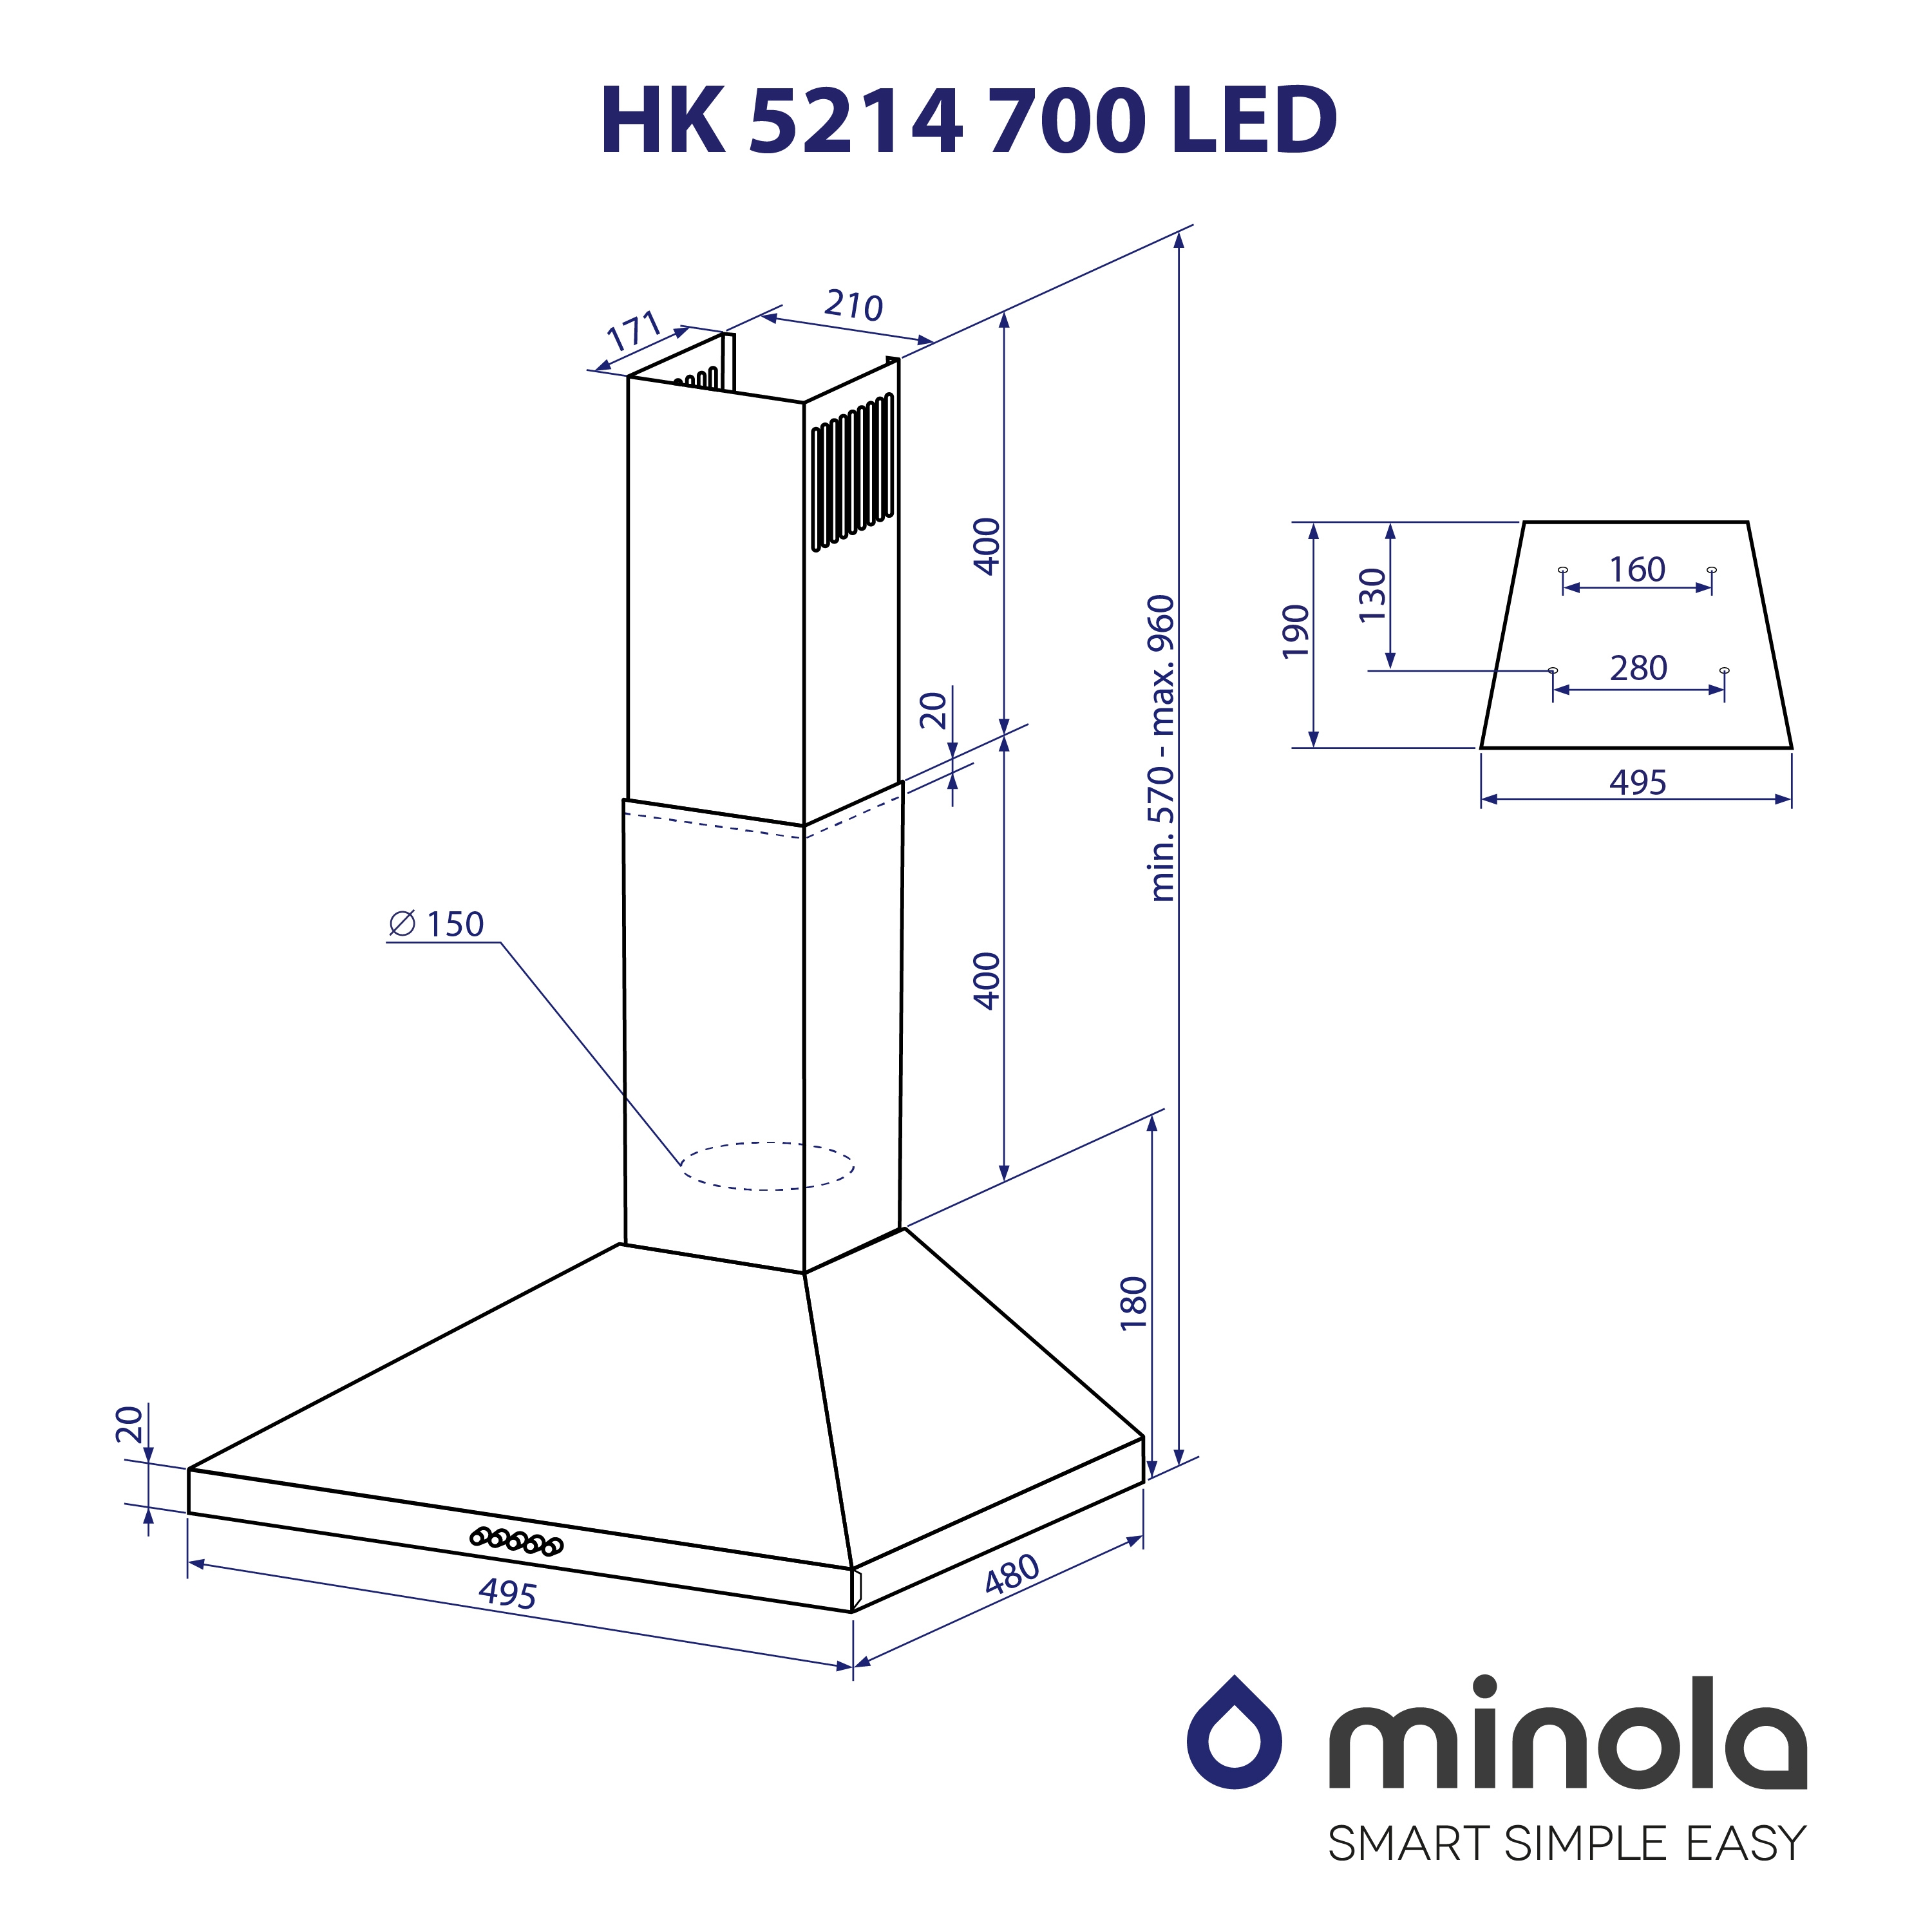 Minola HK 5214 I 700 LED Габаритные размеры